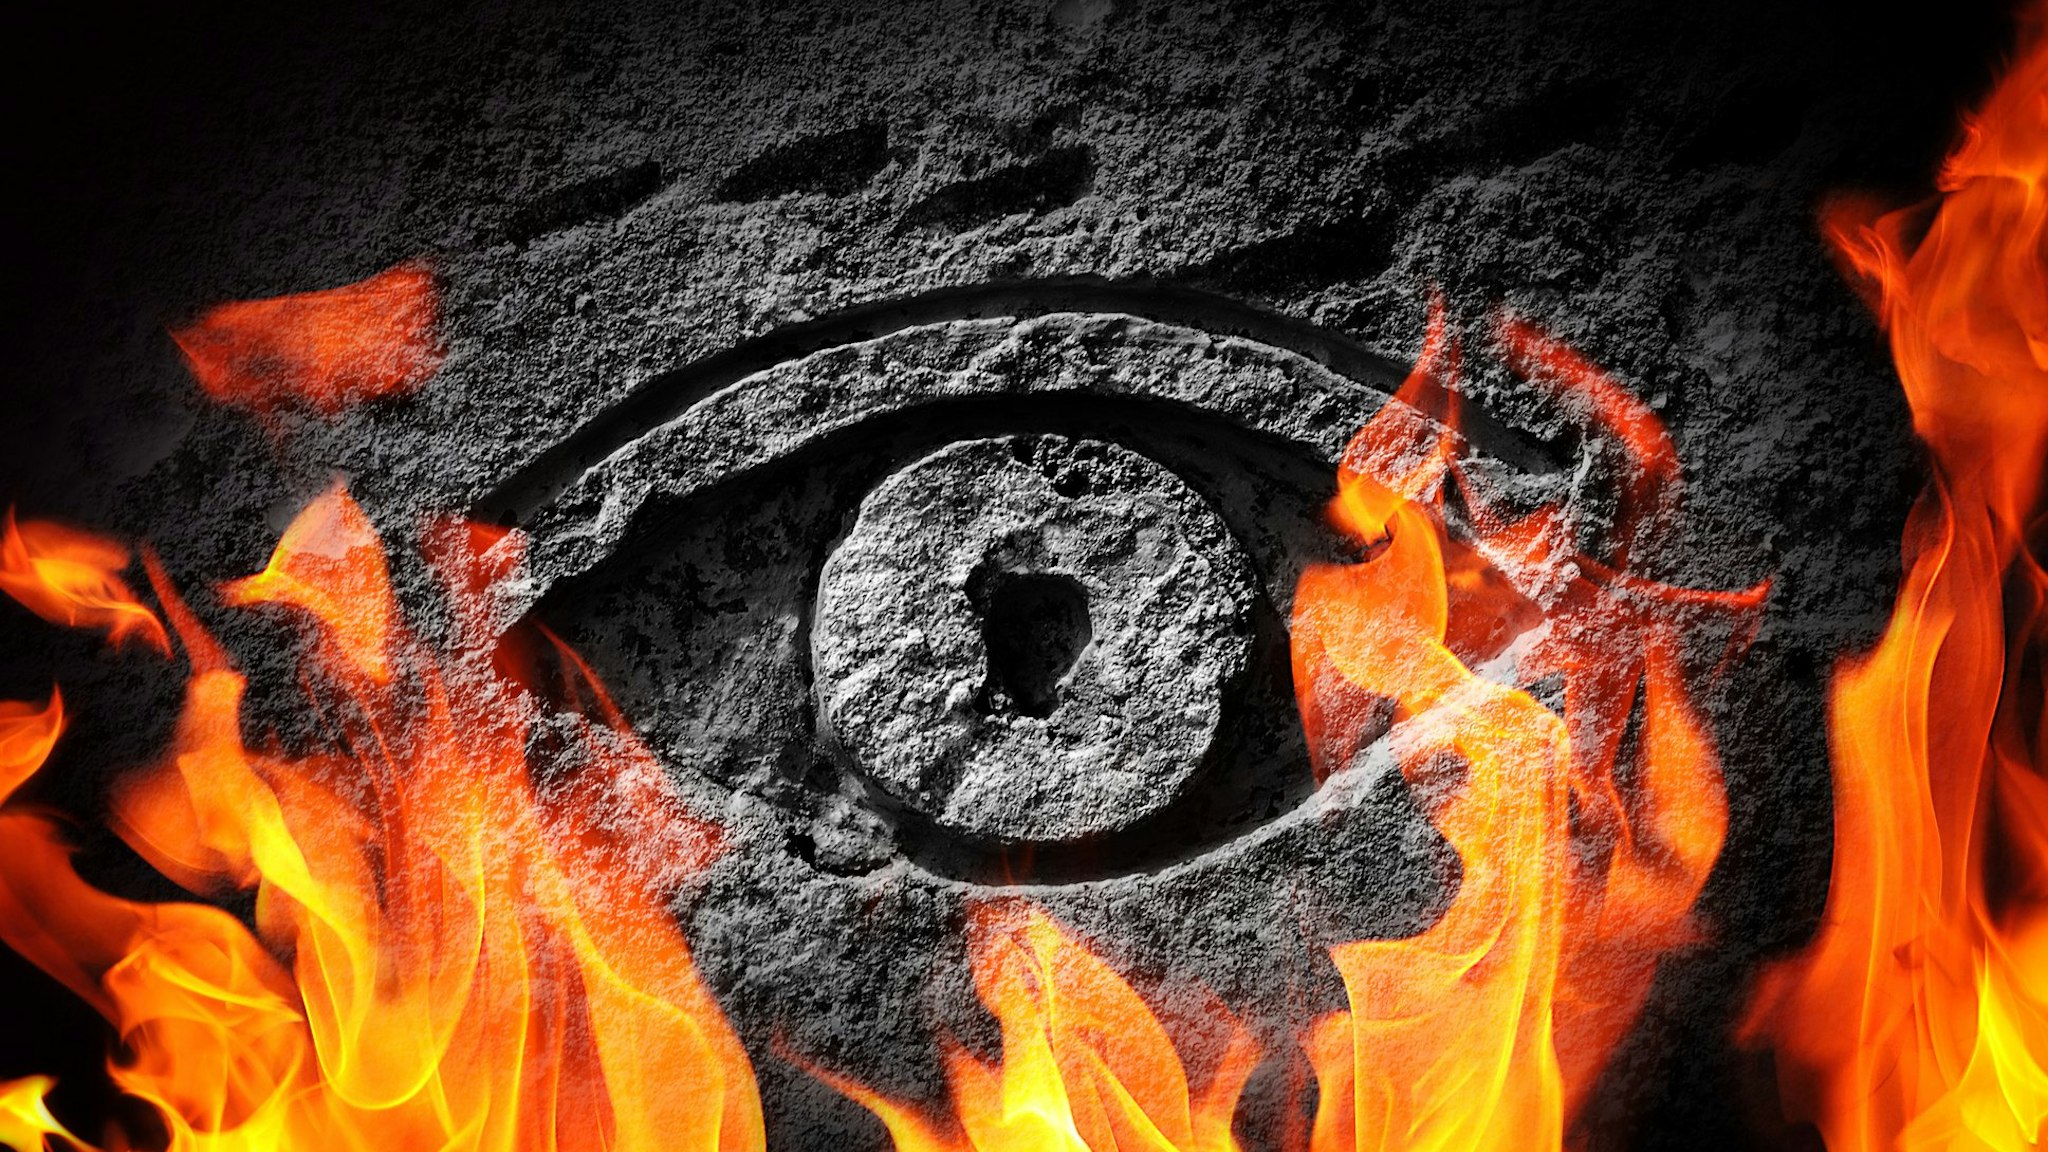 A stone eye engulfed in flames